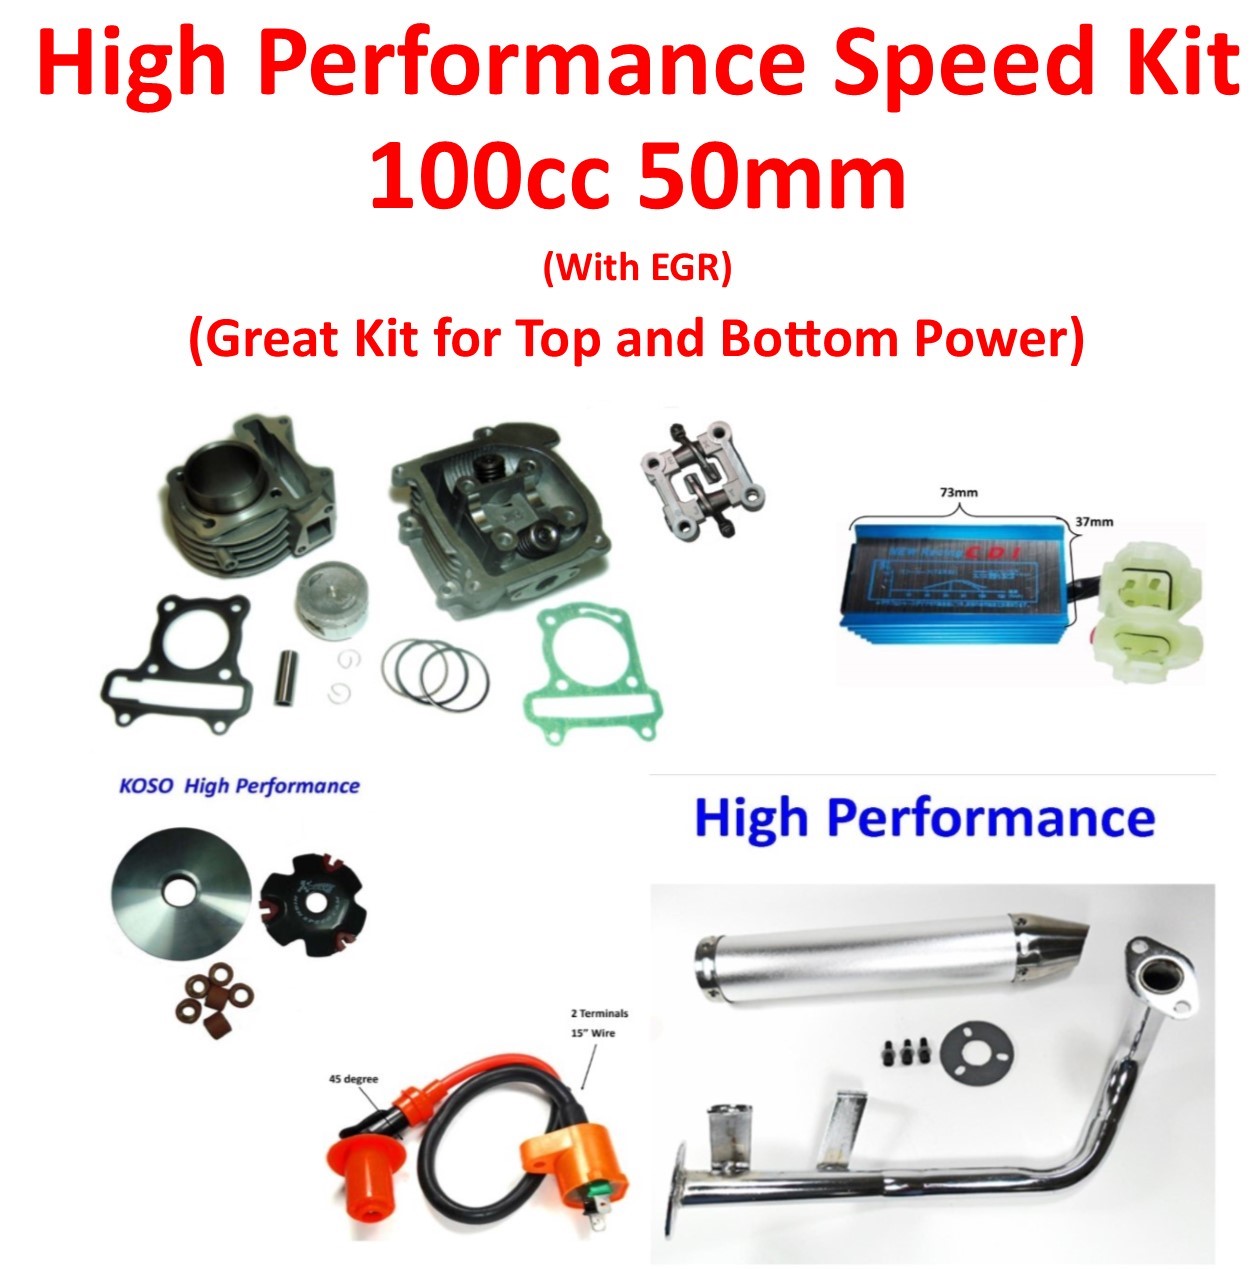 High Performance Speed Kit GY6-100cc (50mm)